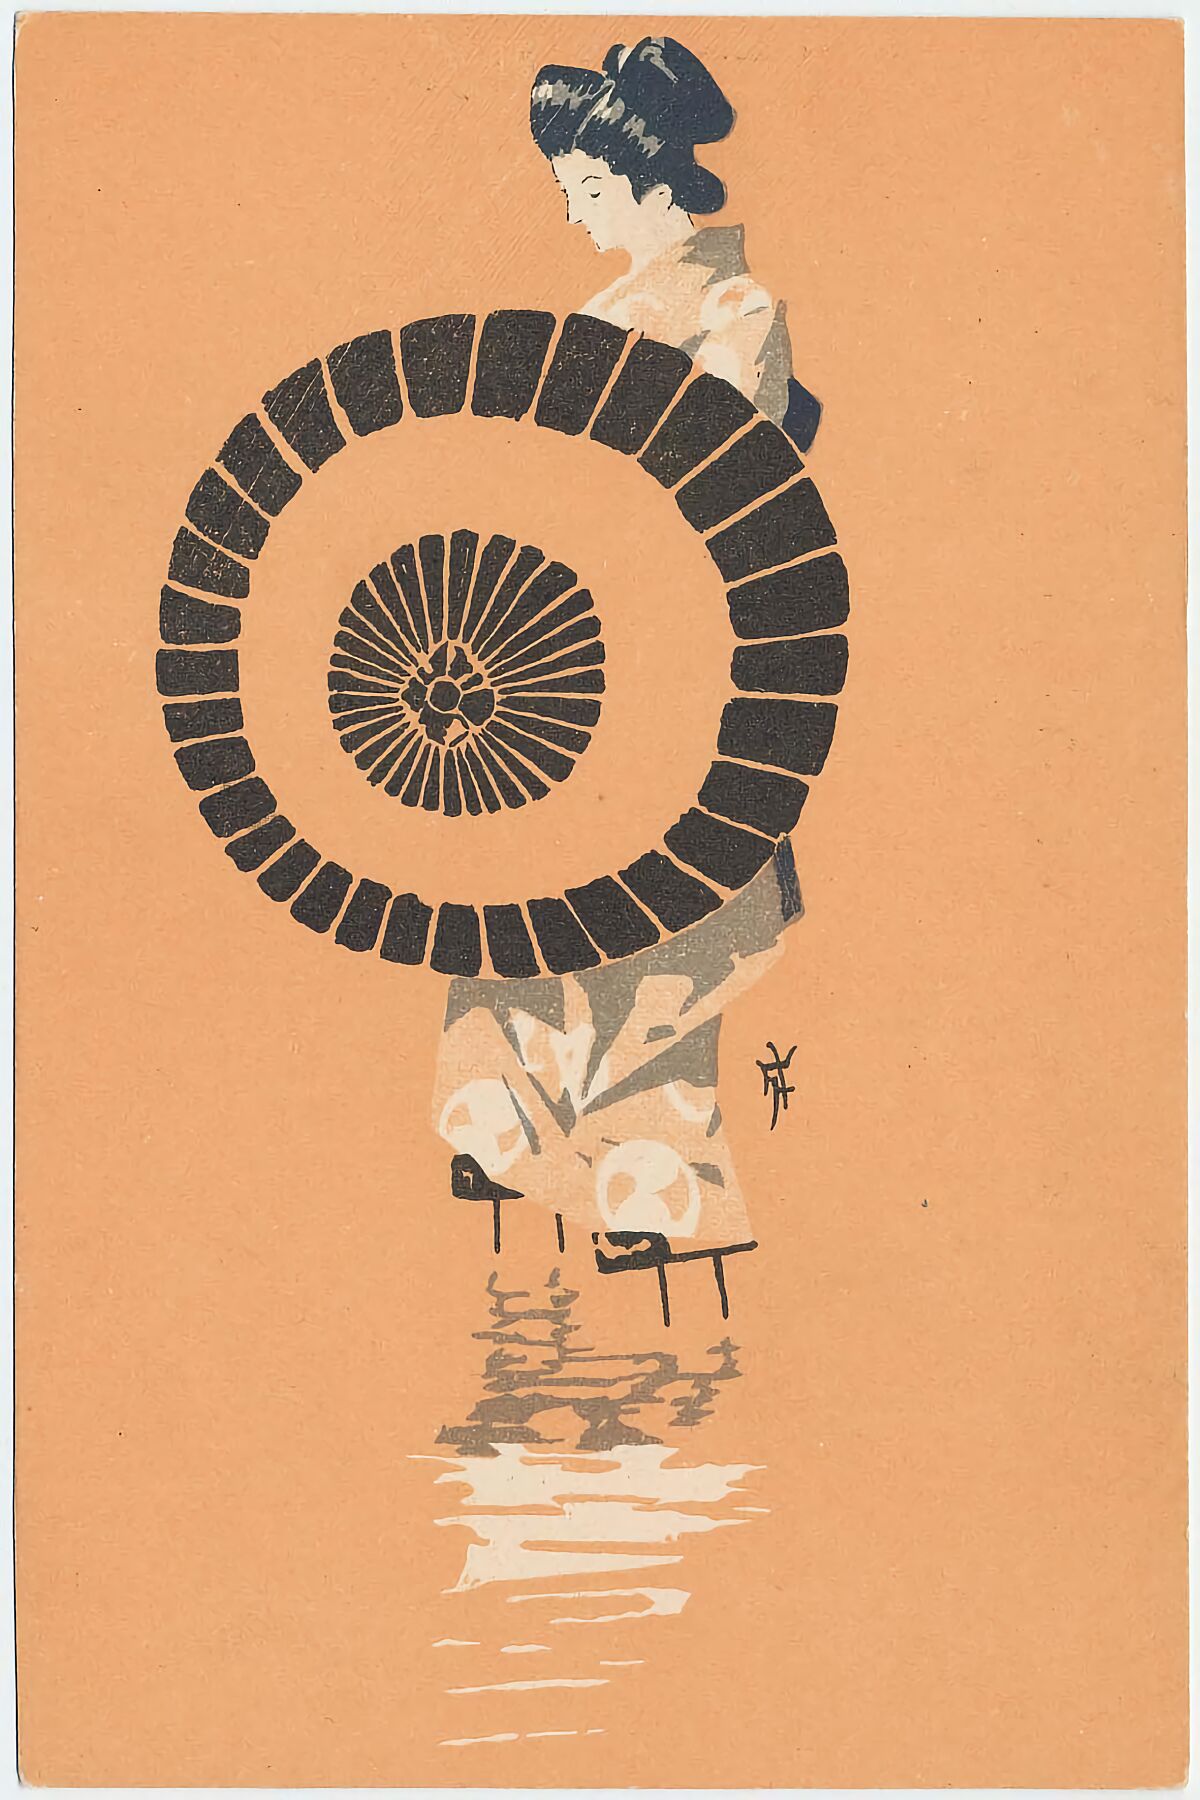 Woman with Umbrella by Ichijô Narumi - c. 1906